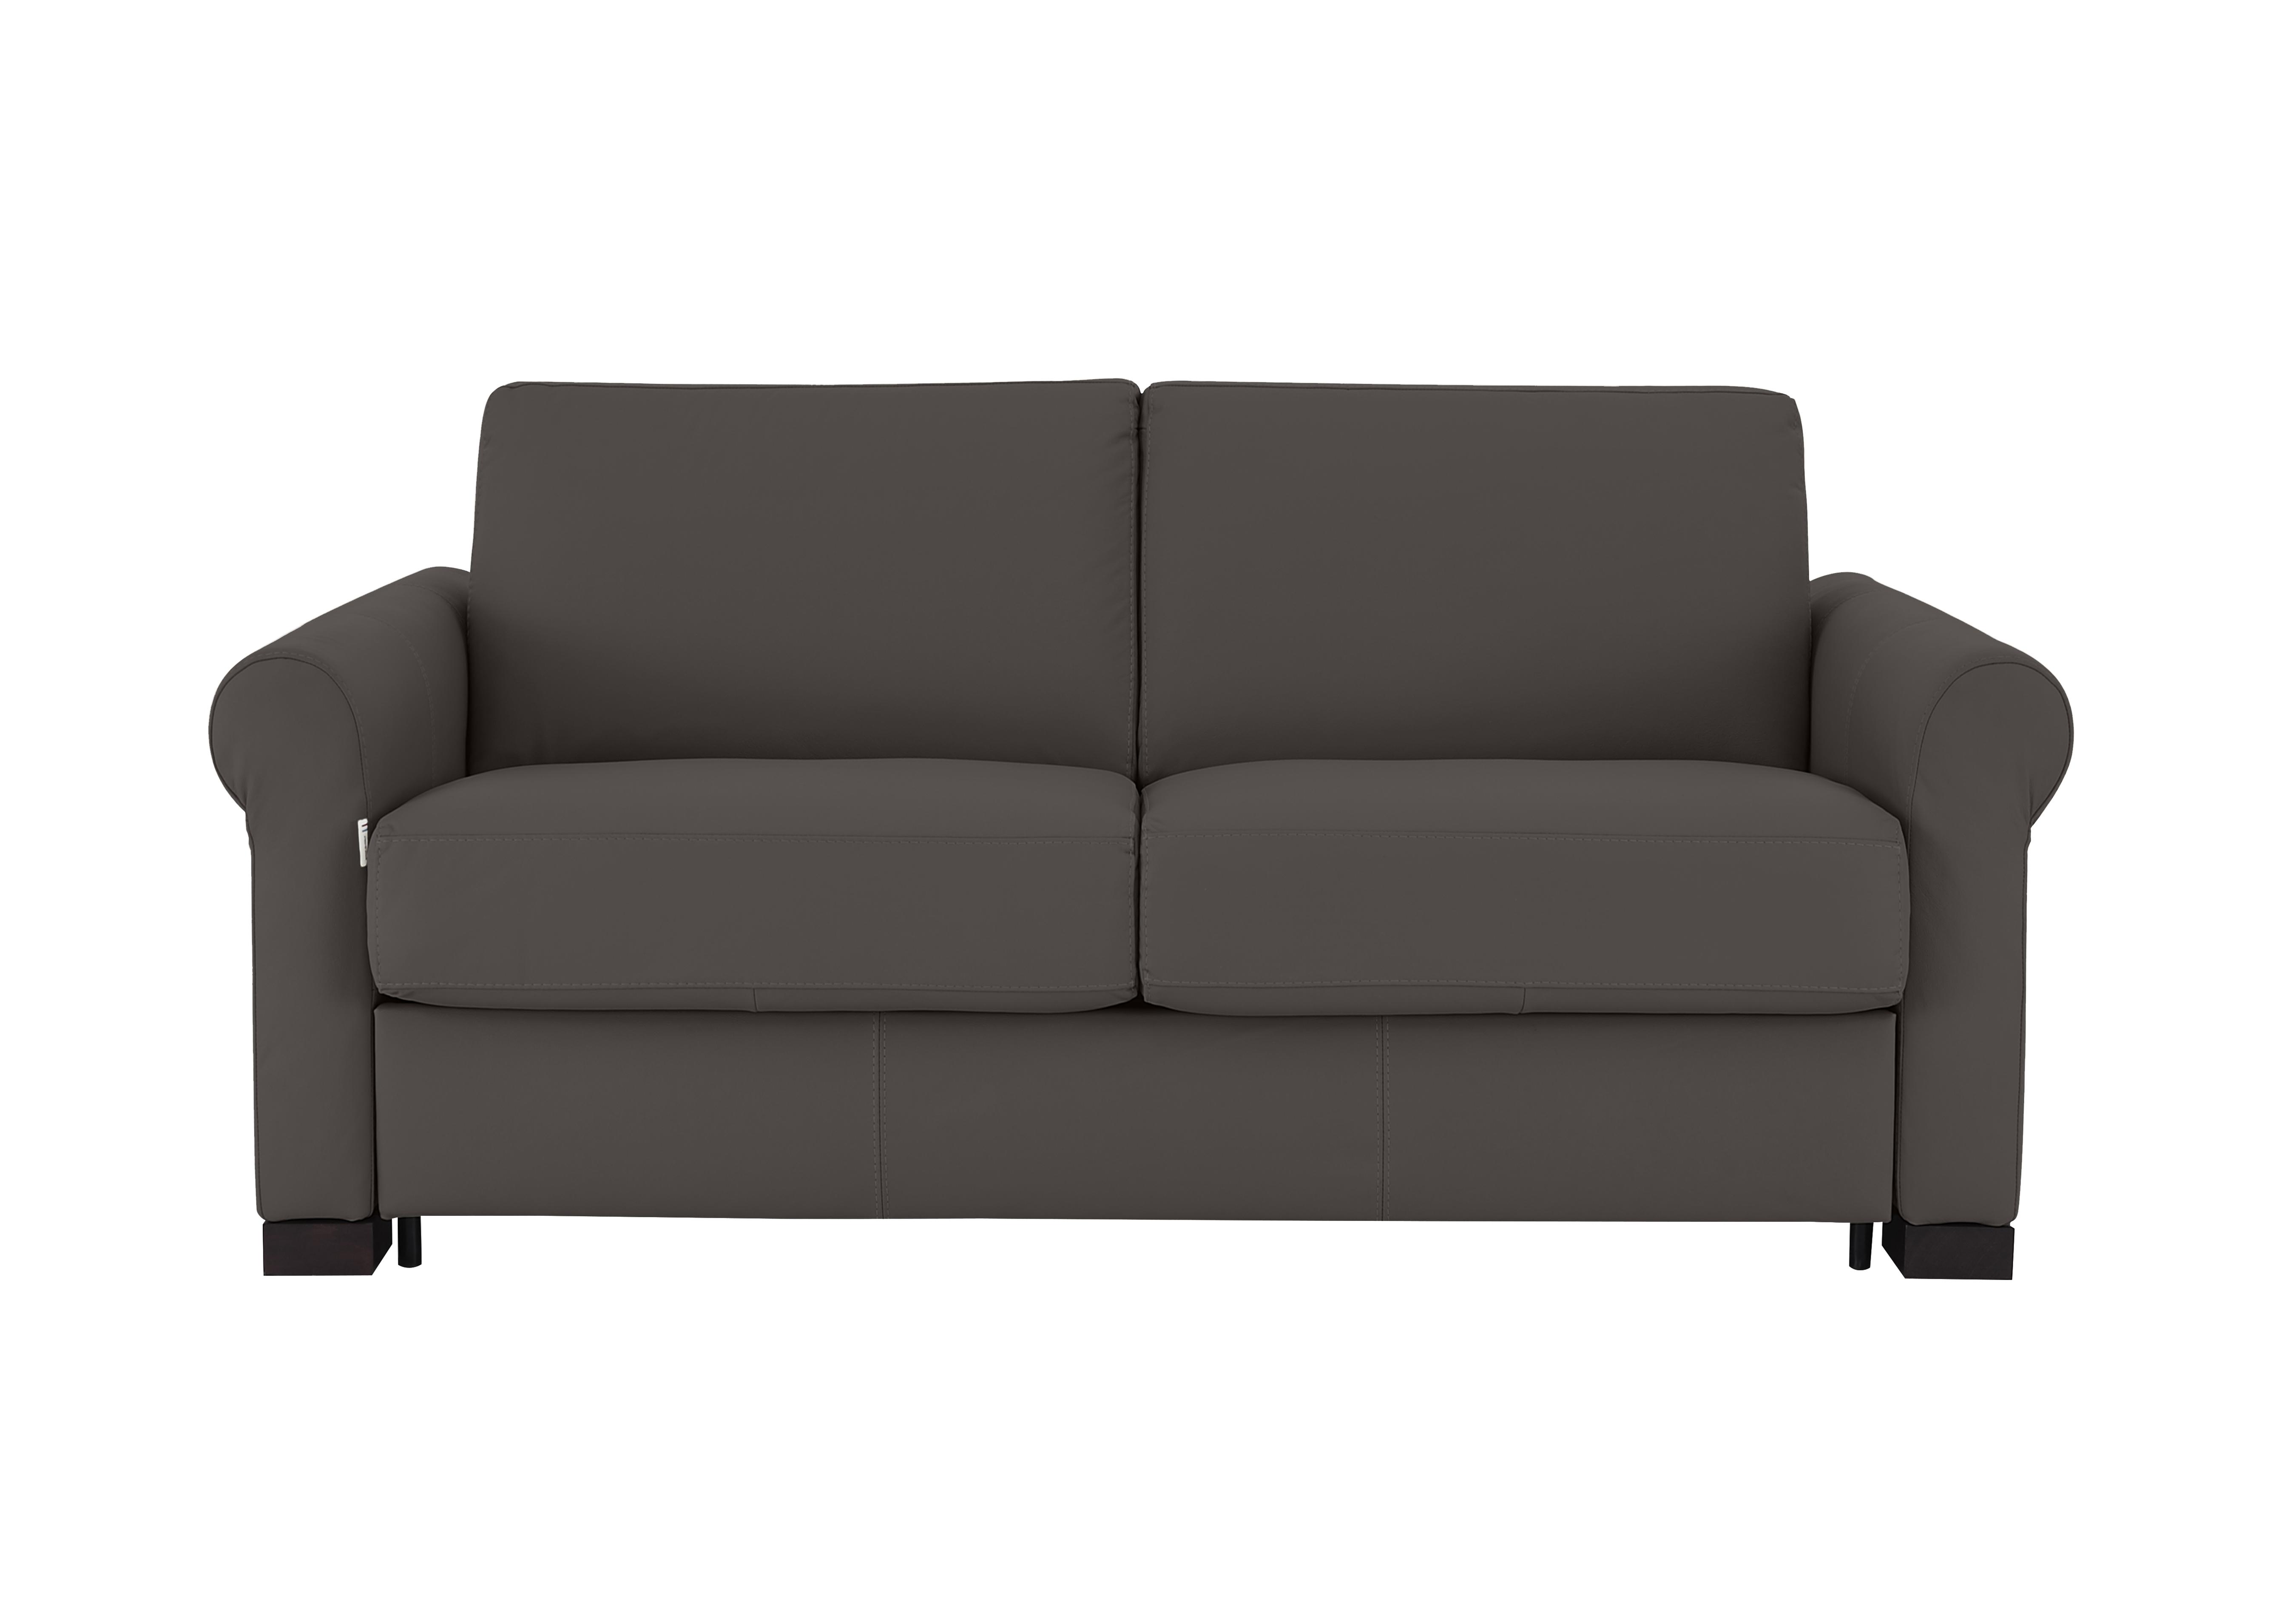 Alcova 2 Seater Leather Sofa Bed with Scroll Arms in Torello Grigio Scuro 327 on Furniture Village